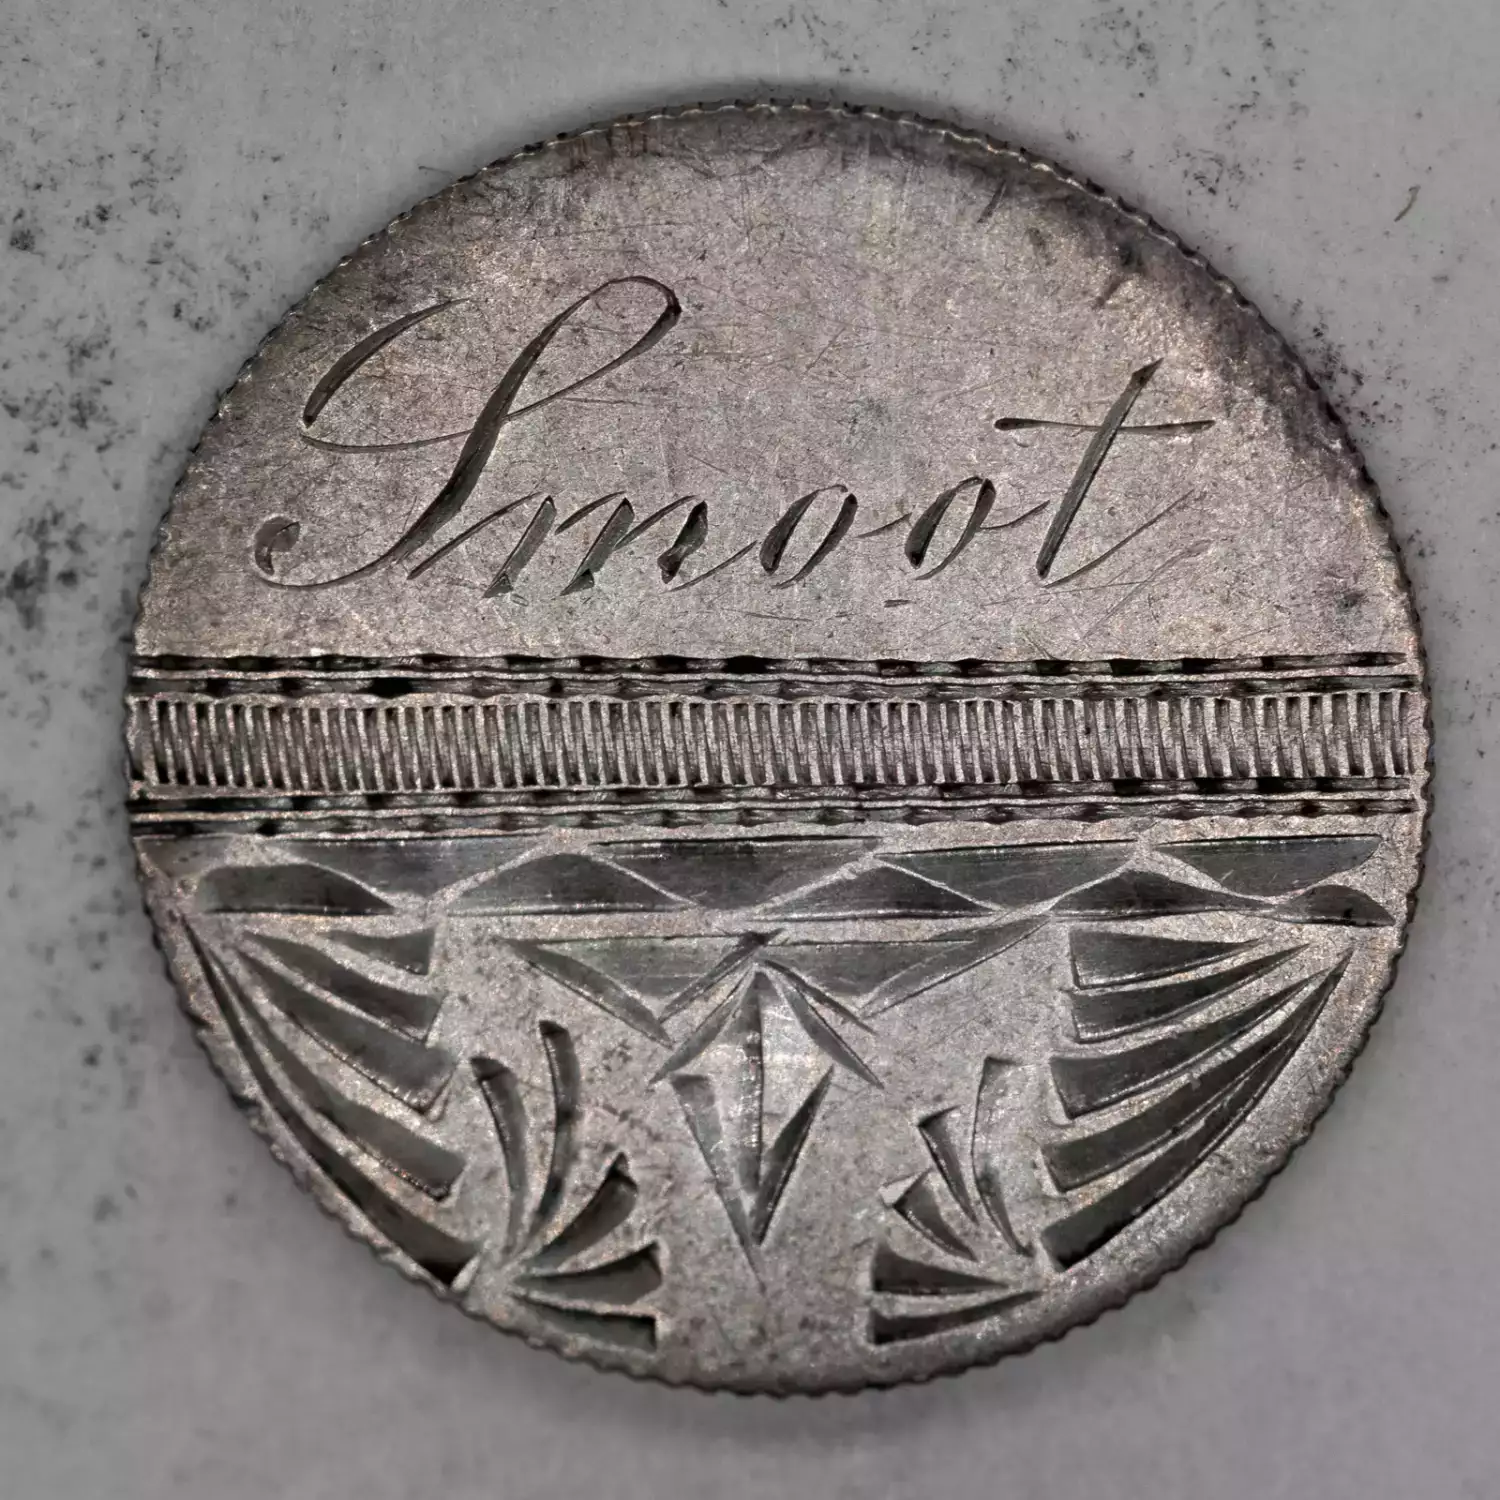 Dimes---Barber or Liberty Head 1892-1916 -Silver- 1 Dime